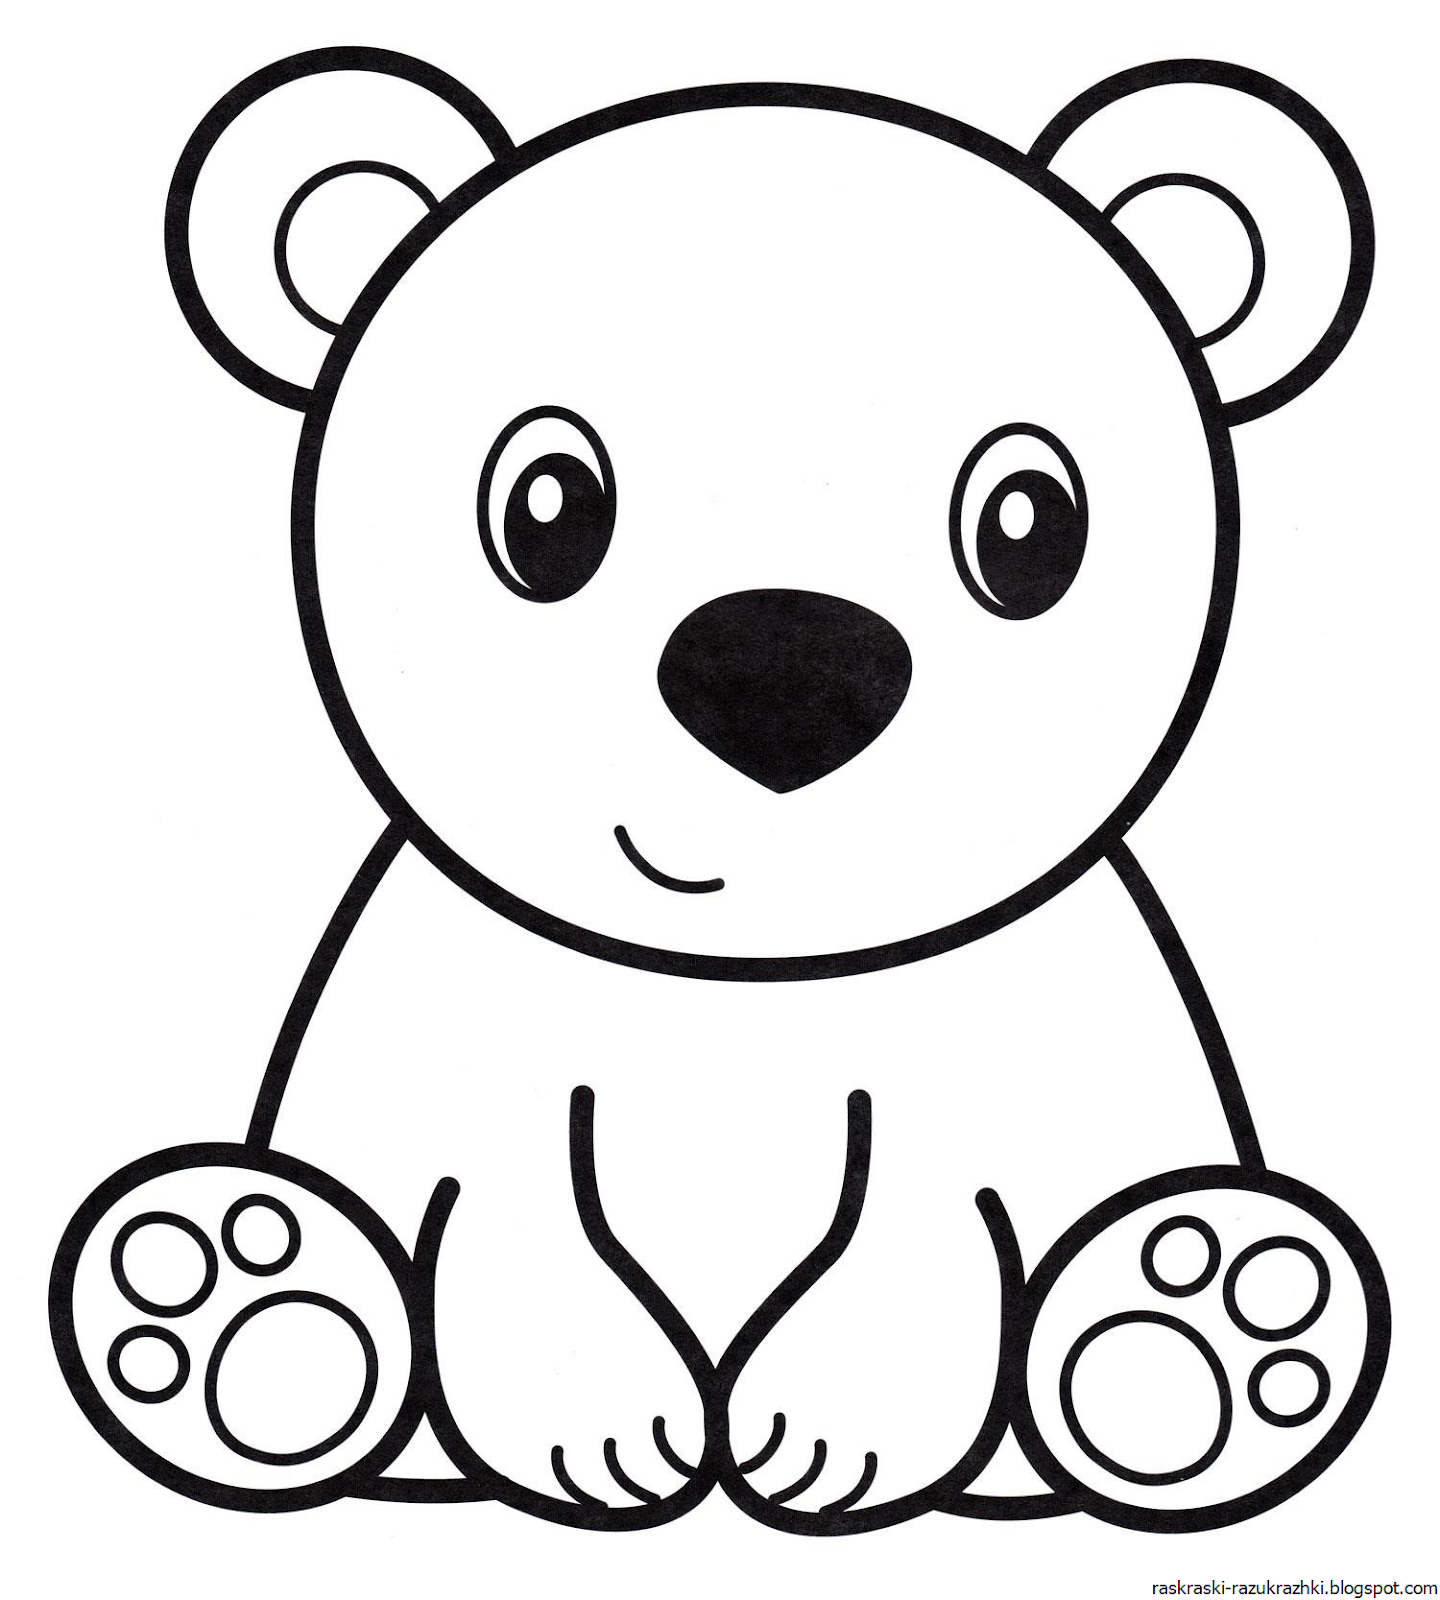 Раскраска 3 года мишка. Раскраска. Медвежонок. Раскраска "мишки". Медведь раскраска для детей. Медвежонок раскраска для детей.